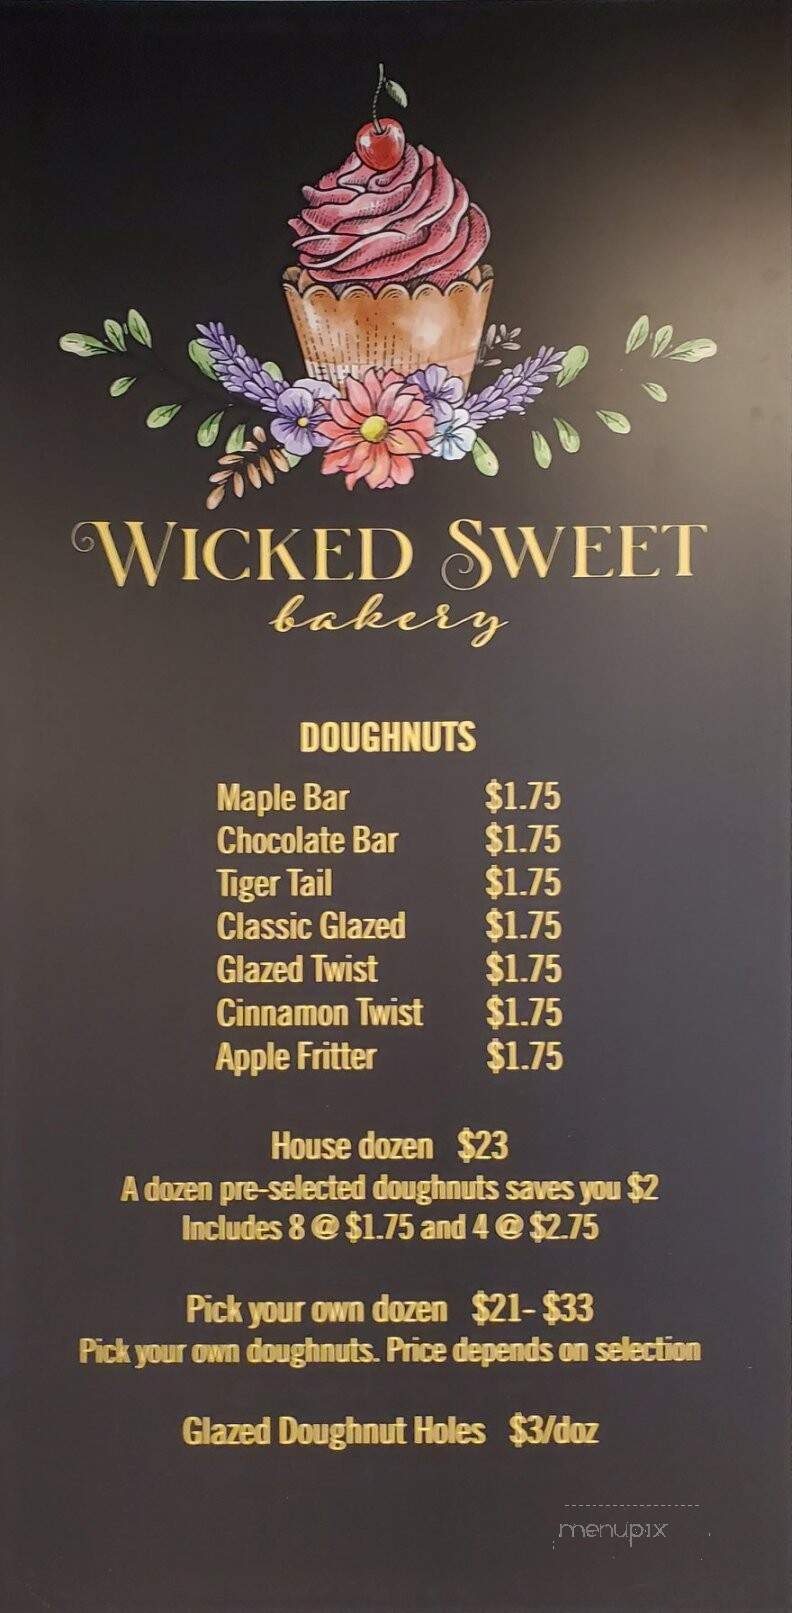 Wicked Sweet Bakery - Keizer, OR